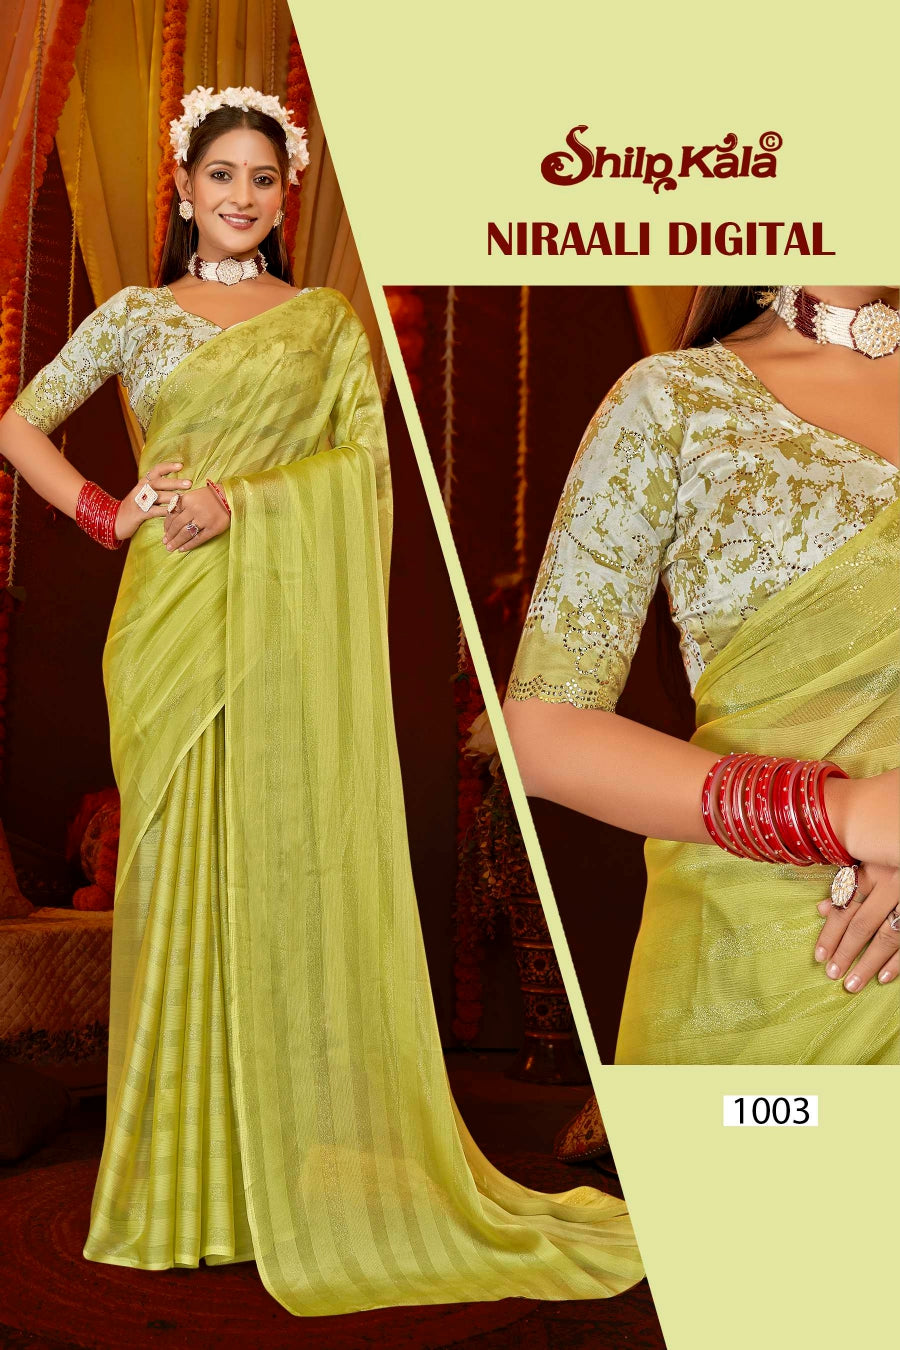 Niraali Shilpkala Fashions Multicolour Moss Saree with Digital Printed Blouse.